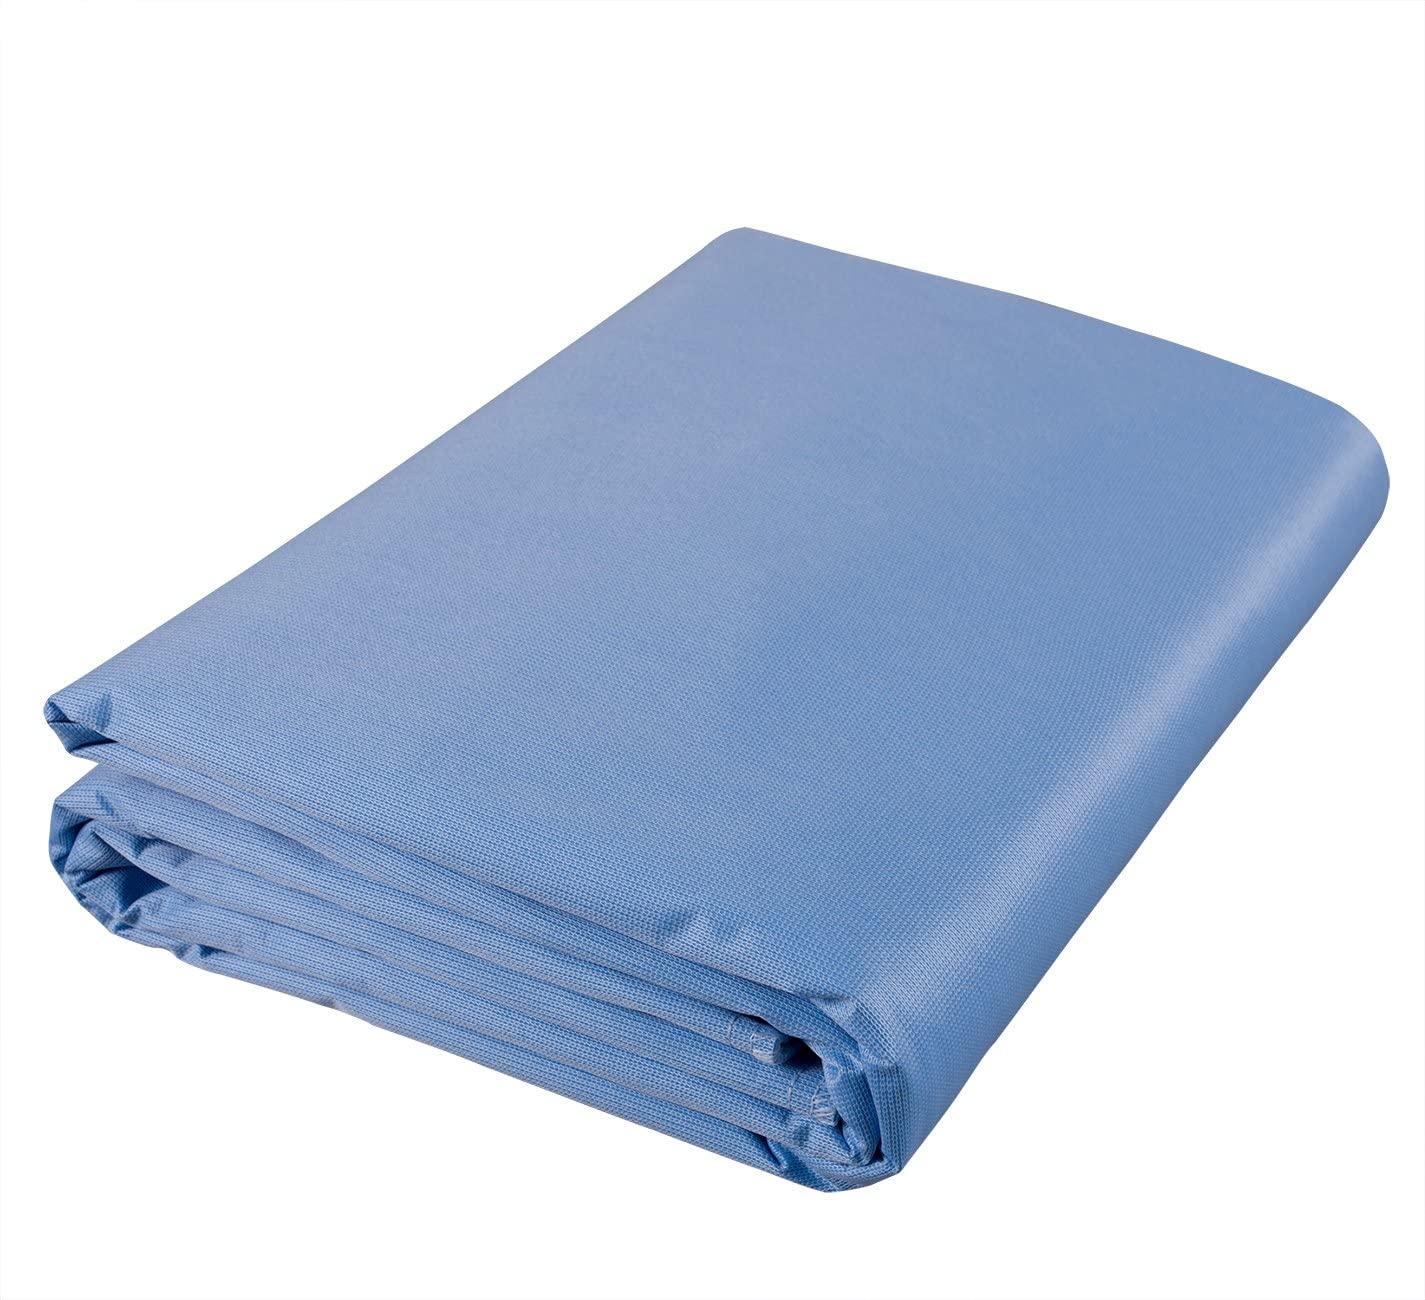 Вкладыш простыня. Reusable Bed wetting Pads. Bed Sheet. Rubber Sheet Bedwetting. Непромокаемые простыни для лежачих